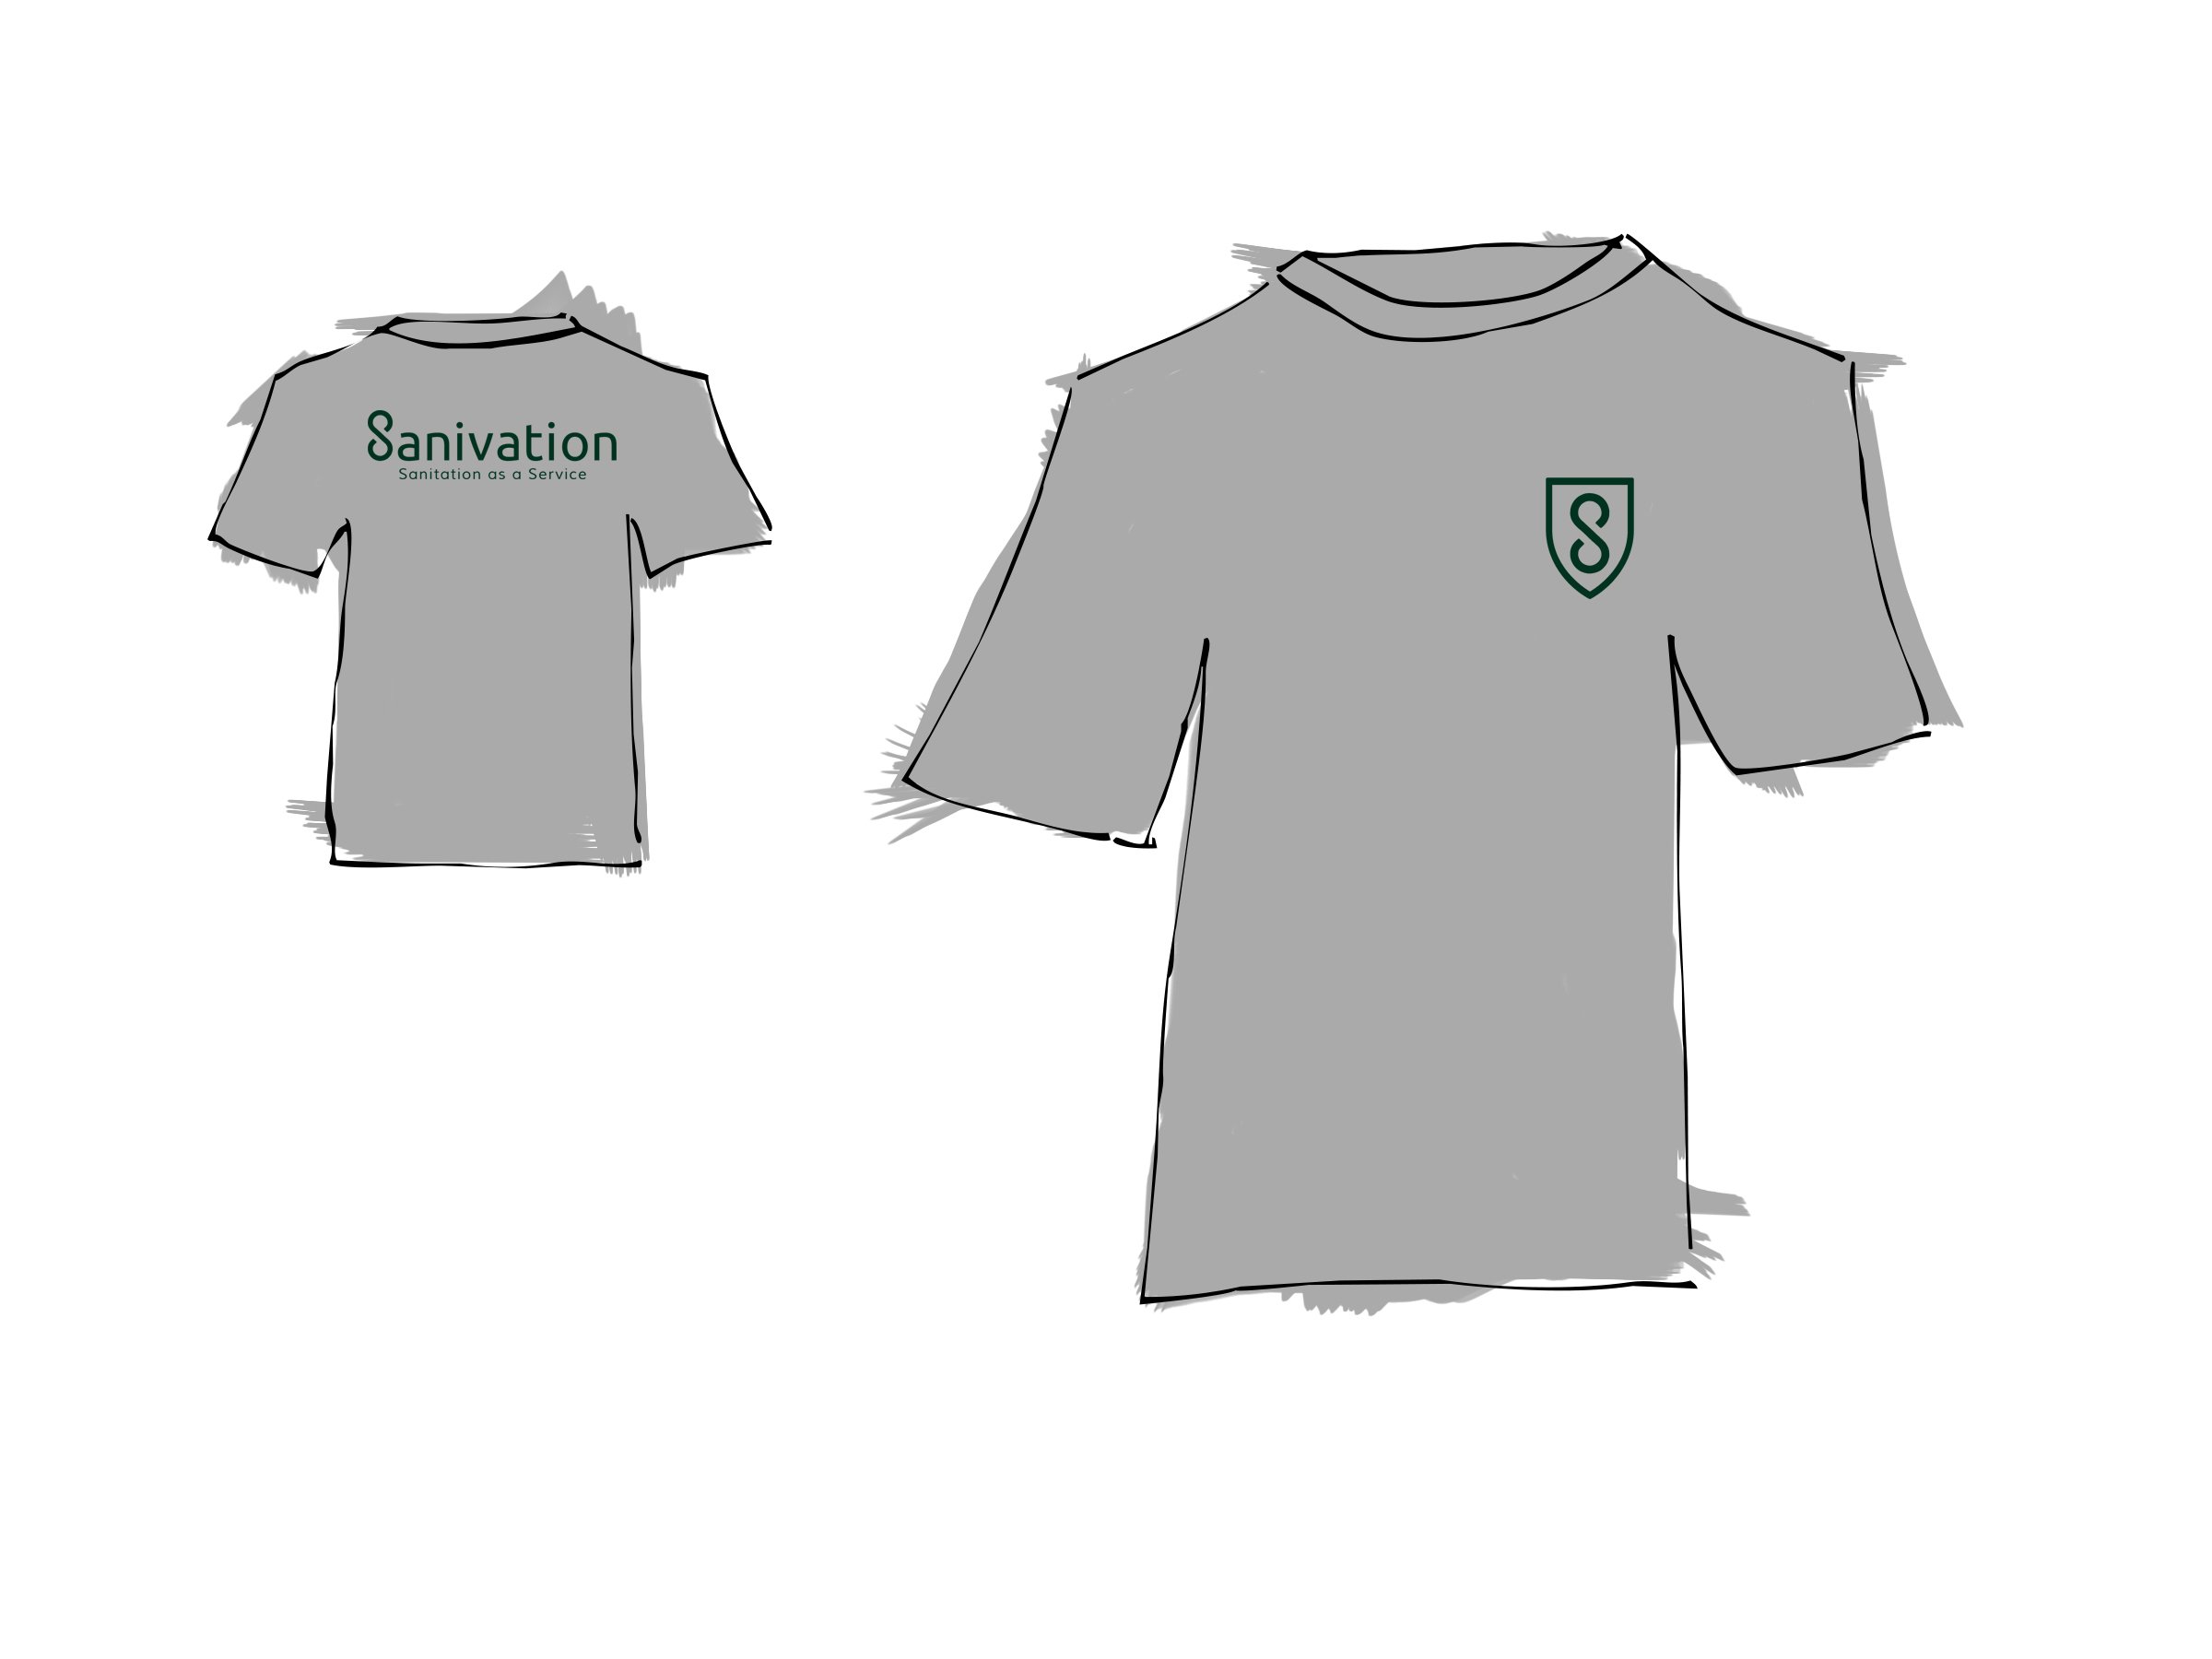 T-Shirt Mockup Draft 1 (Sanivation Green on Grey).jpg